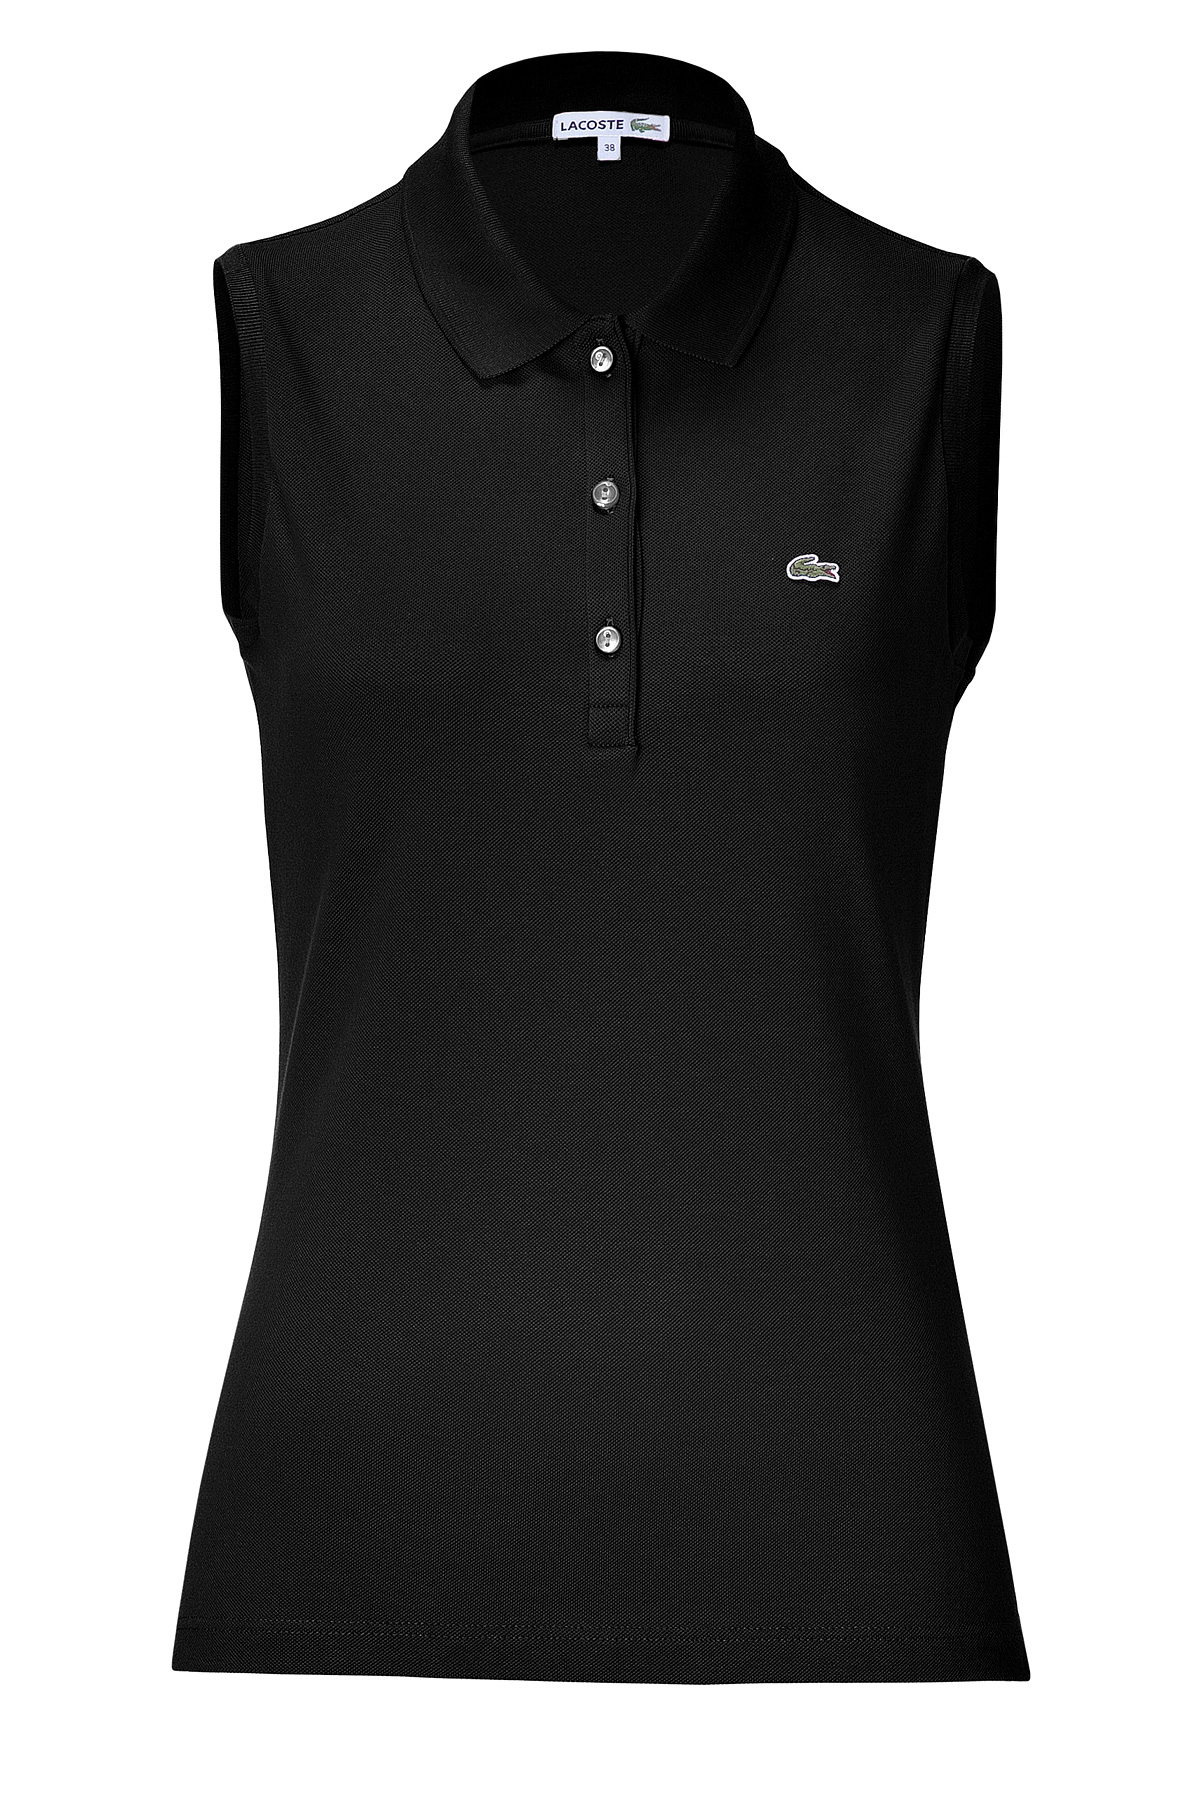 Lacoste Black Sleeveless Polo Shirt in Black | Lyst